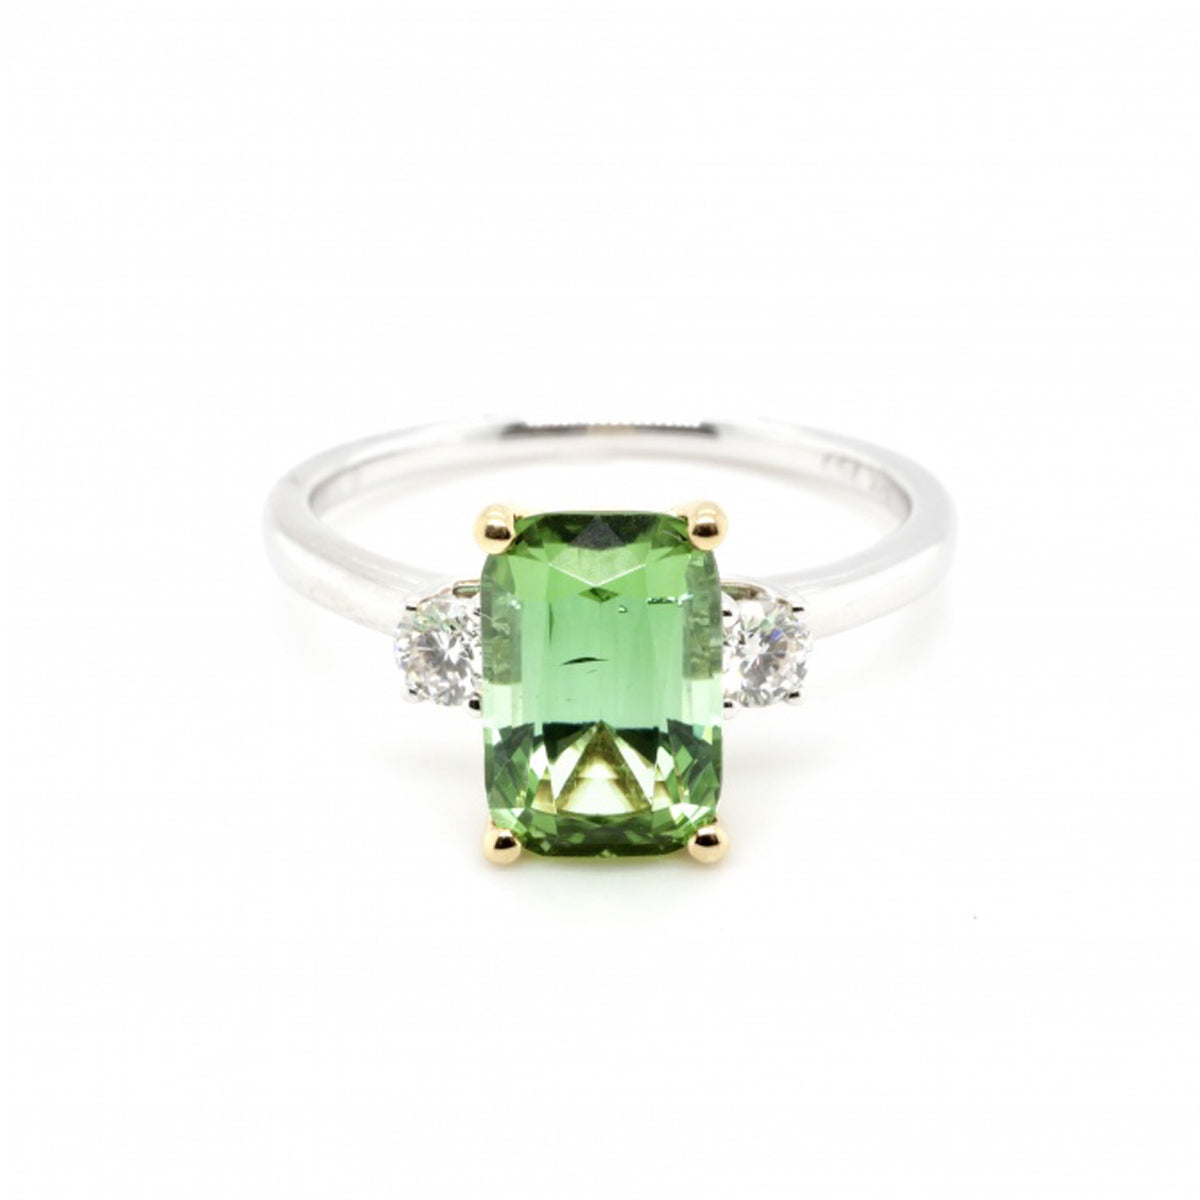 18ct Green Tourmaline and Diamond Ring - Size M